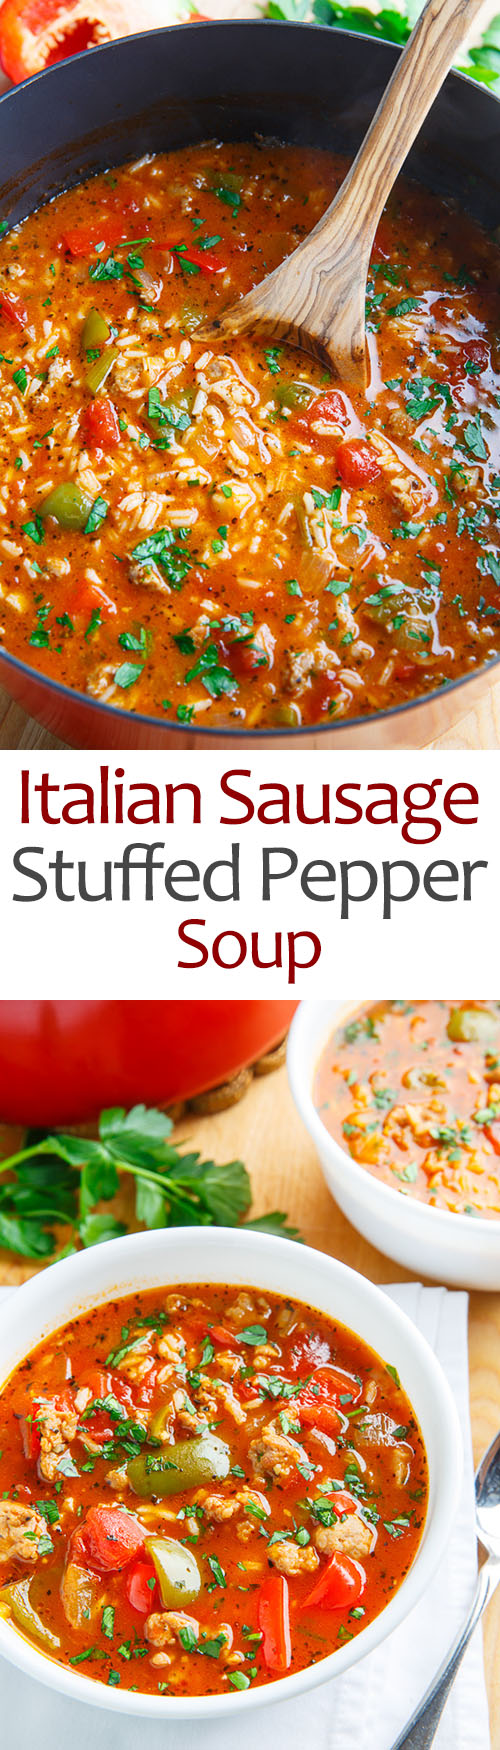 Italian Sausage Stuffed Pepper Soup